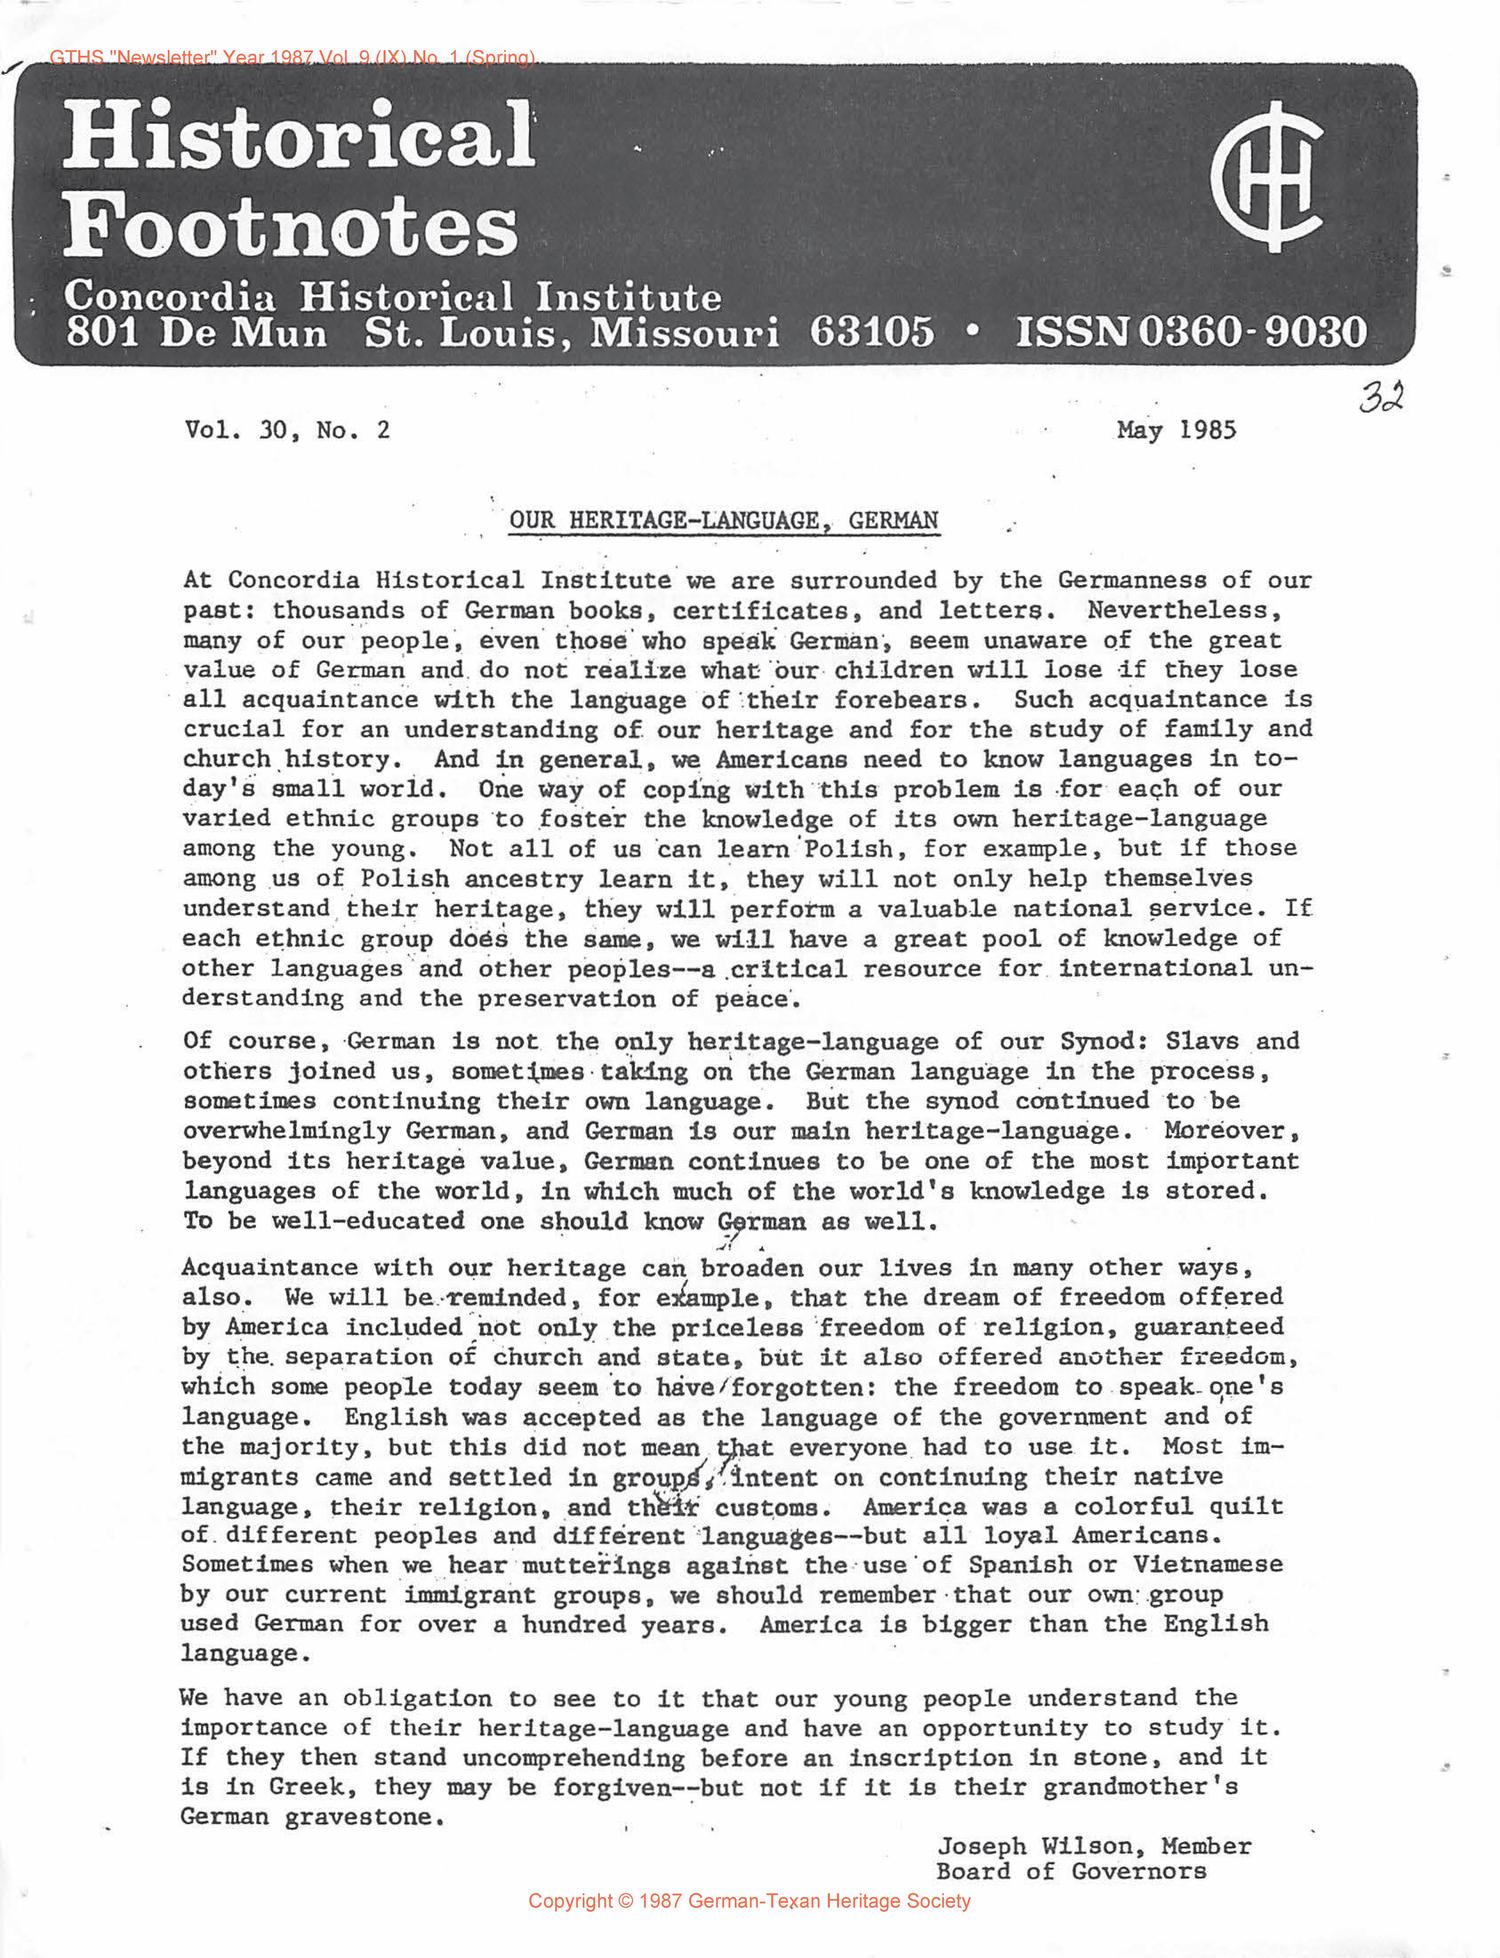 German-Texan Heritage Society Newsletter, Volume 9, Number 1, Spring 1987
                                                
                                                    32
                                                